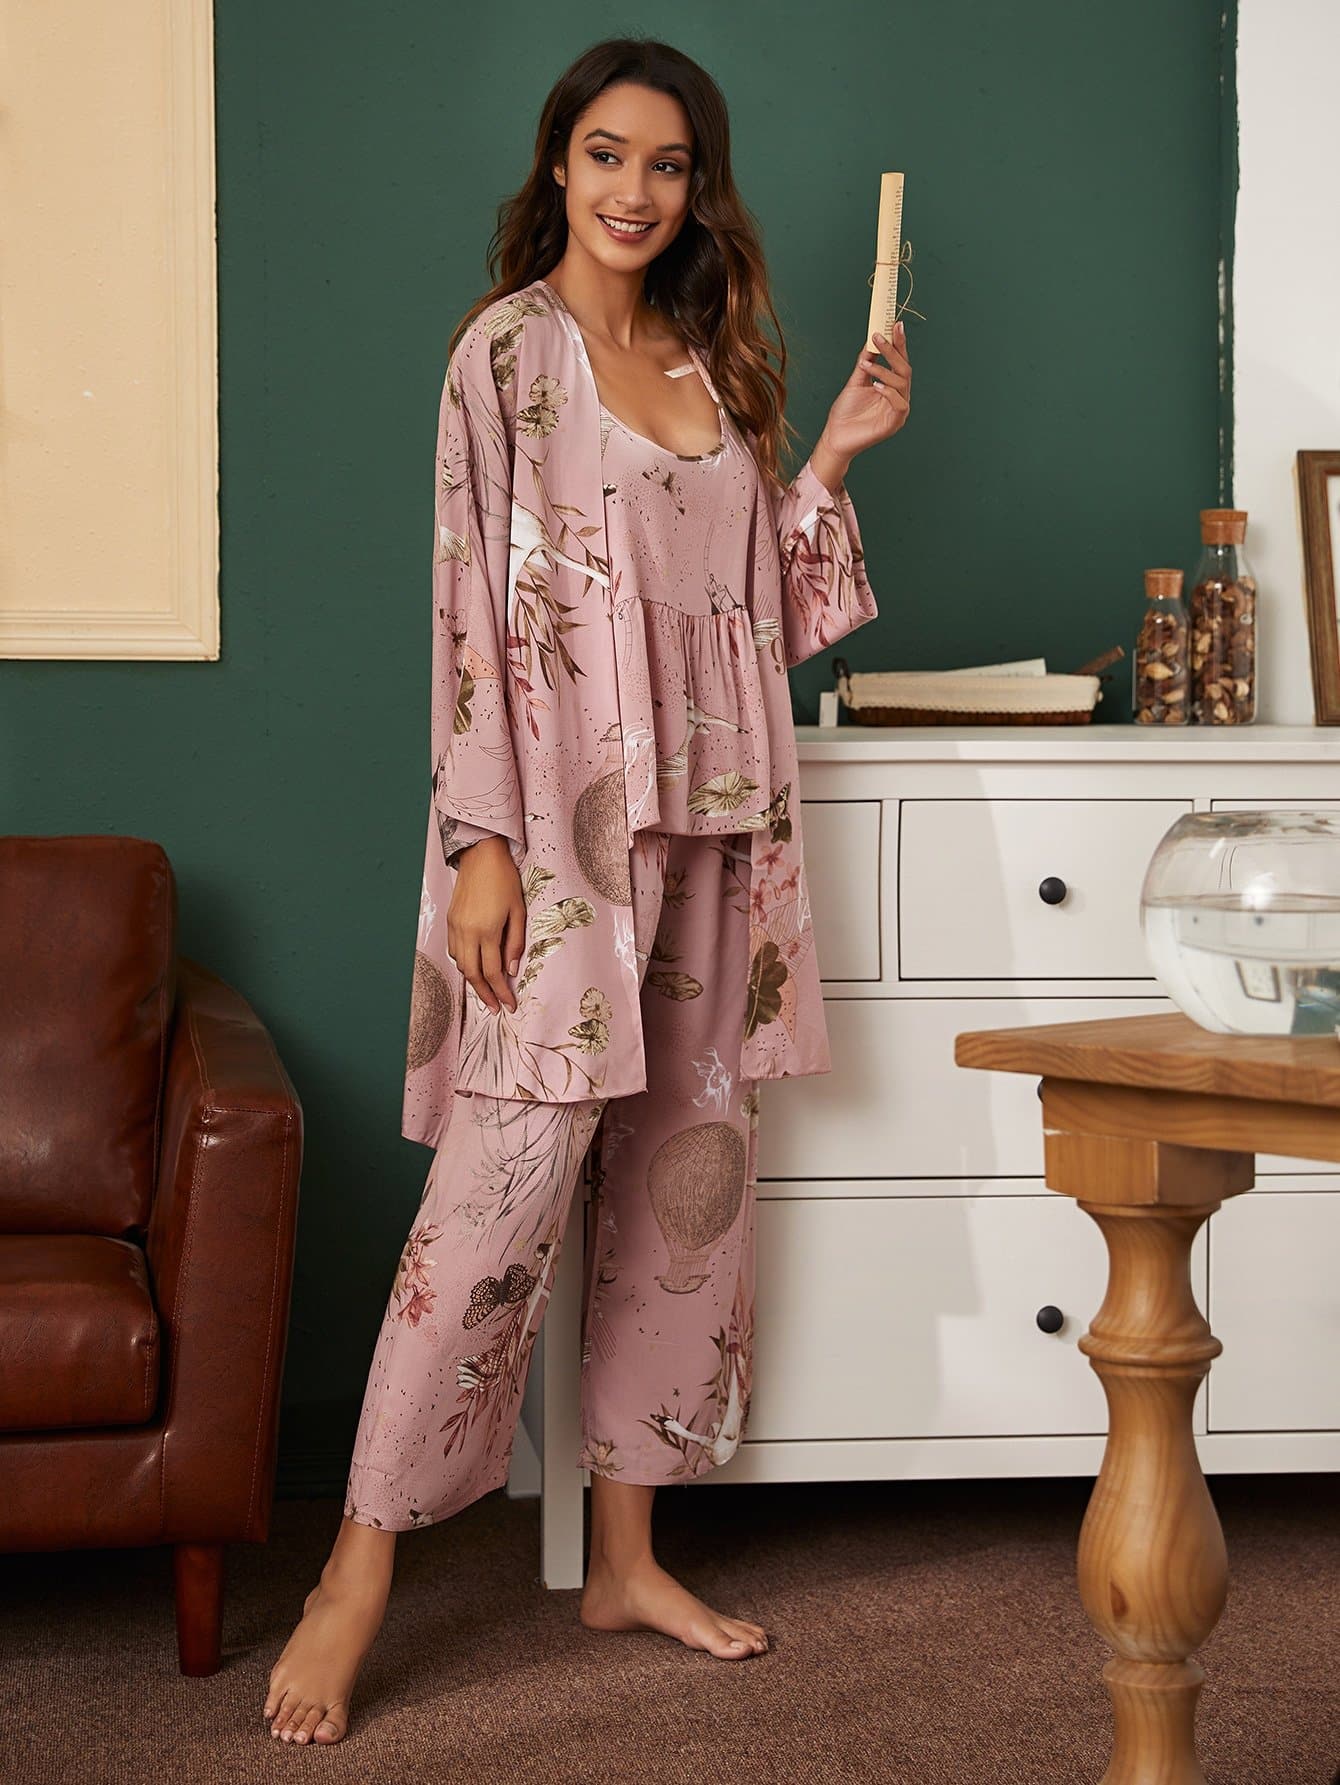 Spaghetti Strap 3pcs Plants and Animal Print Pyjama Sleepwear Set with Robe